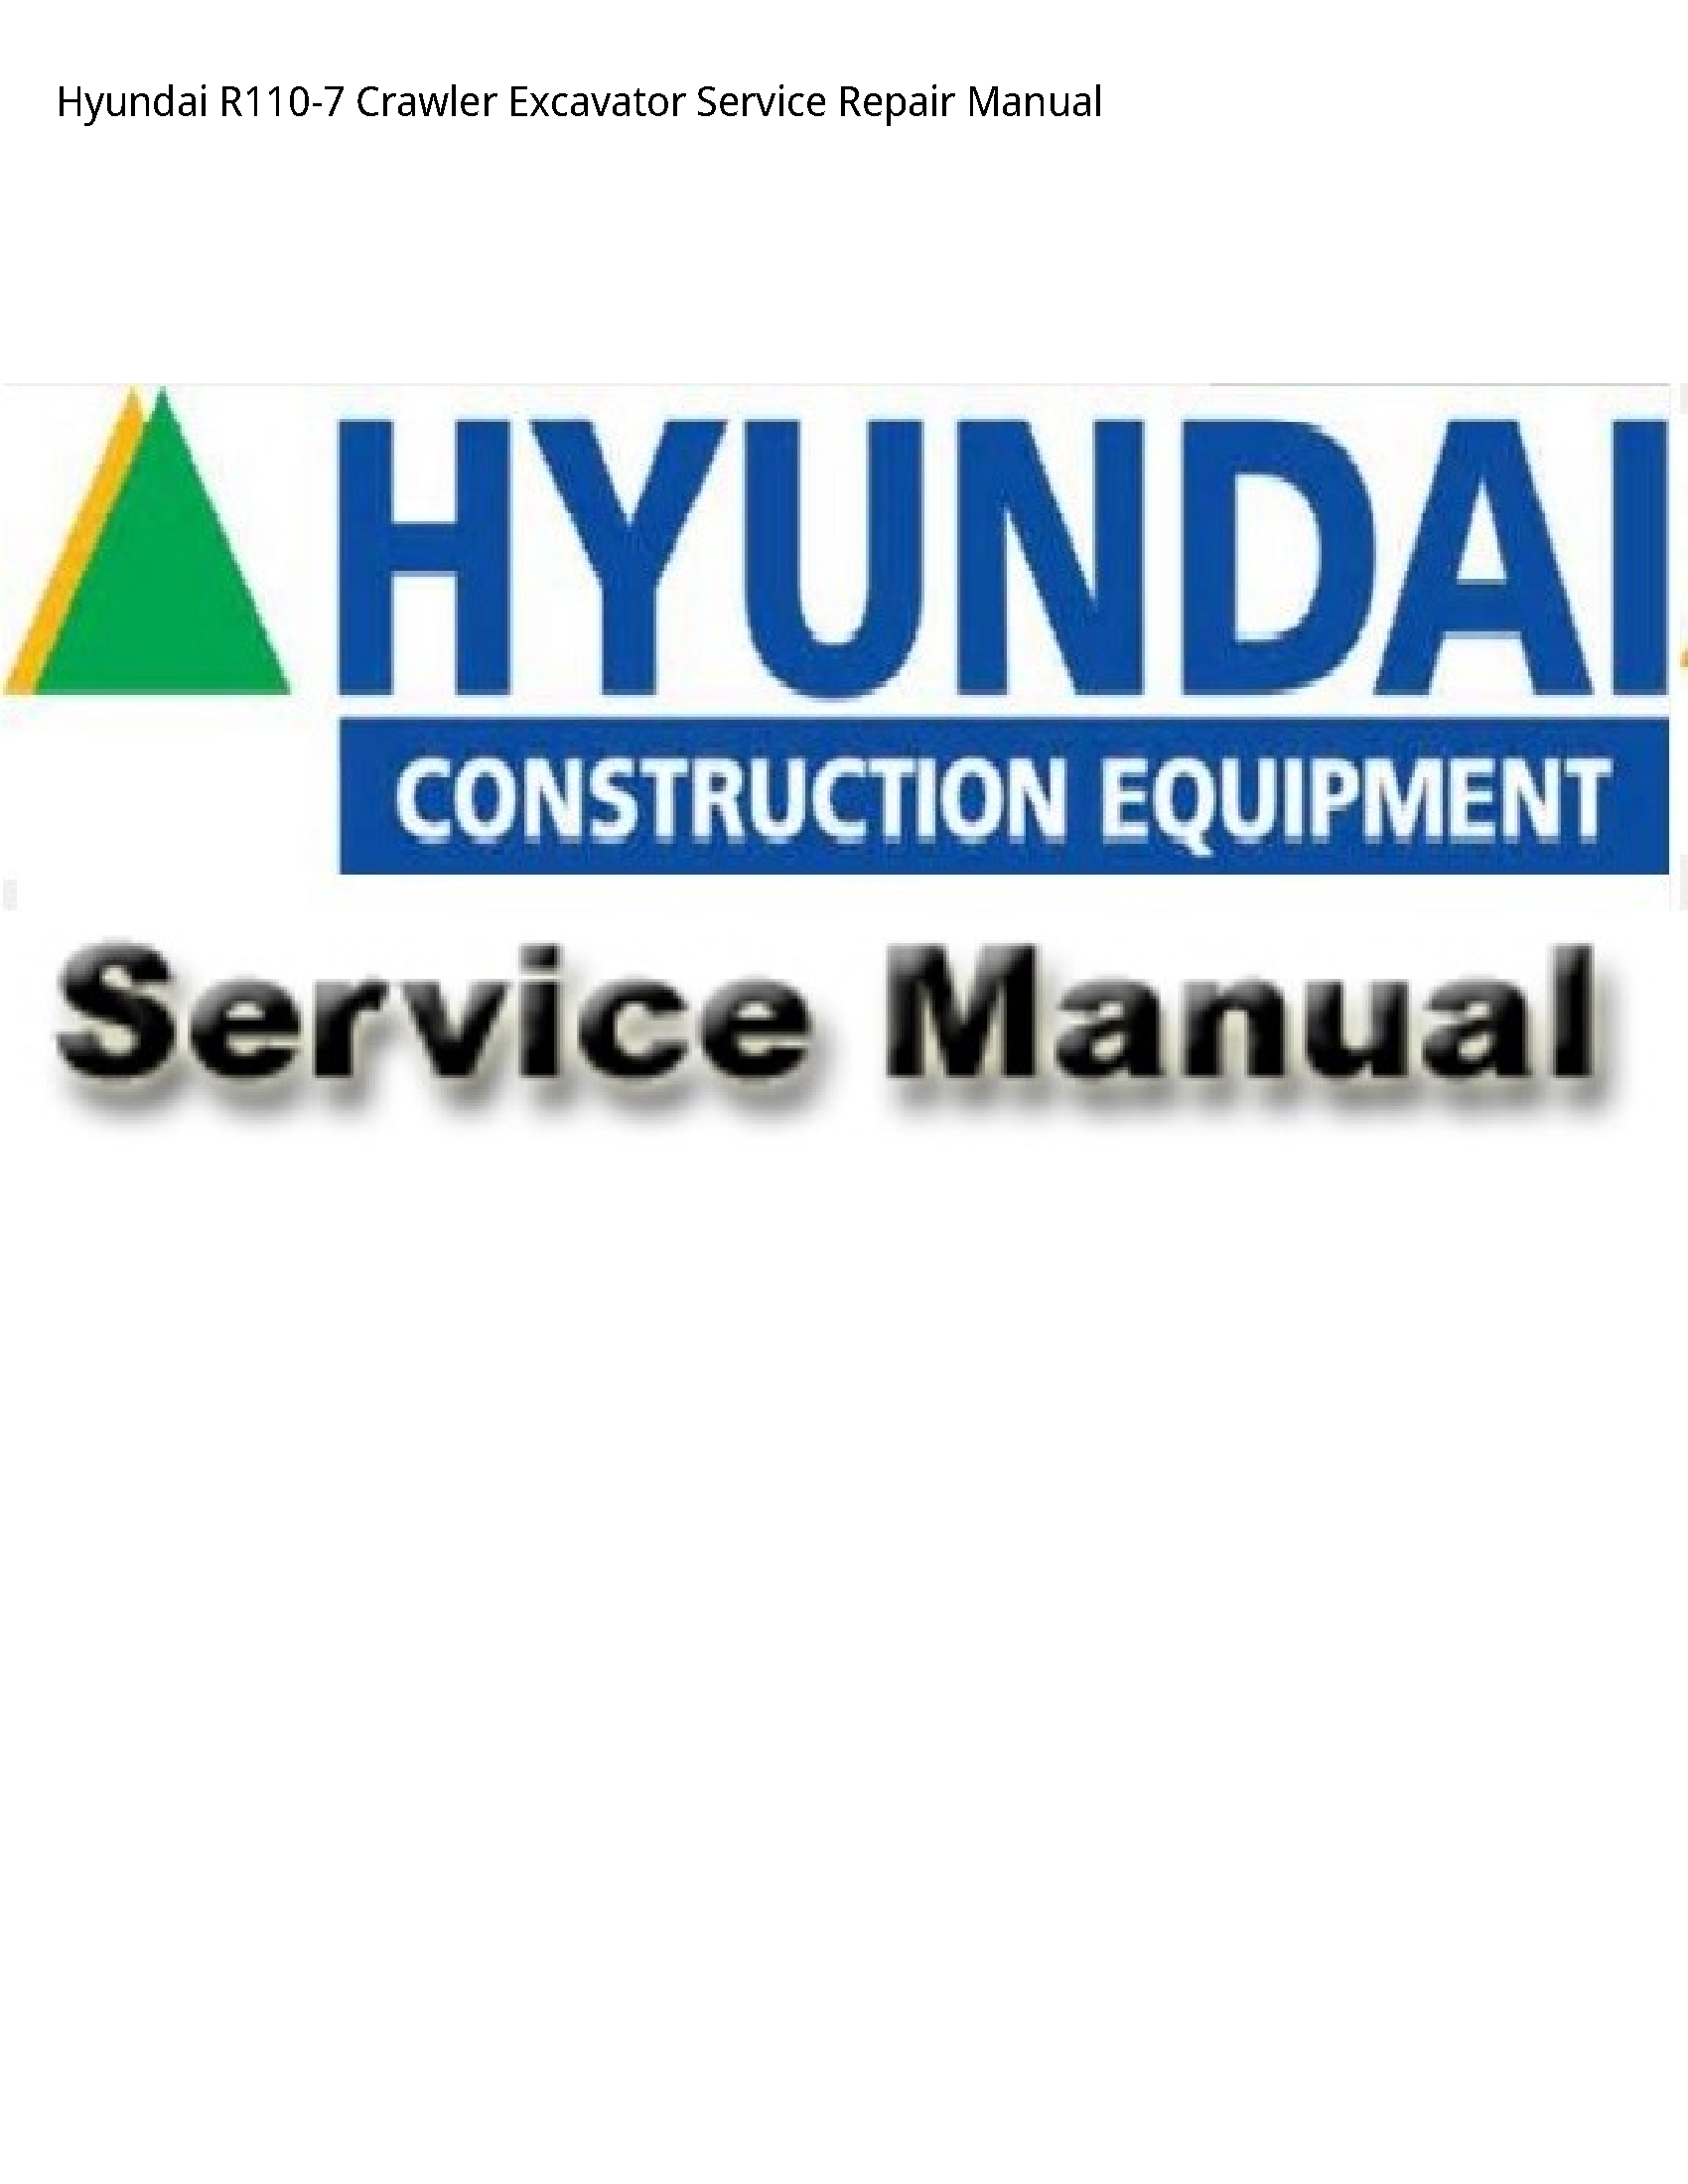 Hyundai R110-7 Crawler Excavator manual